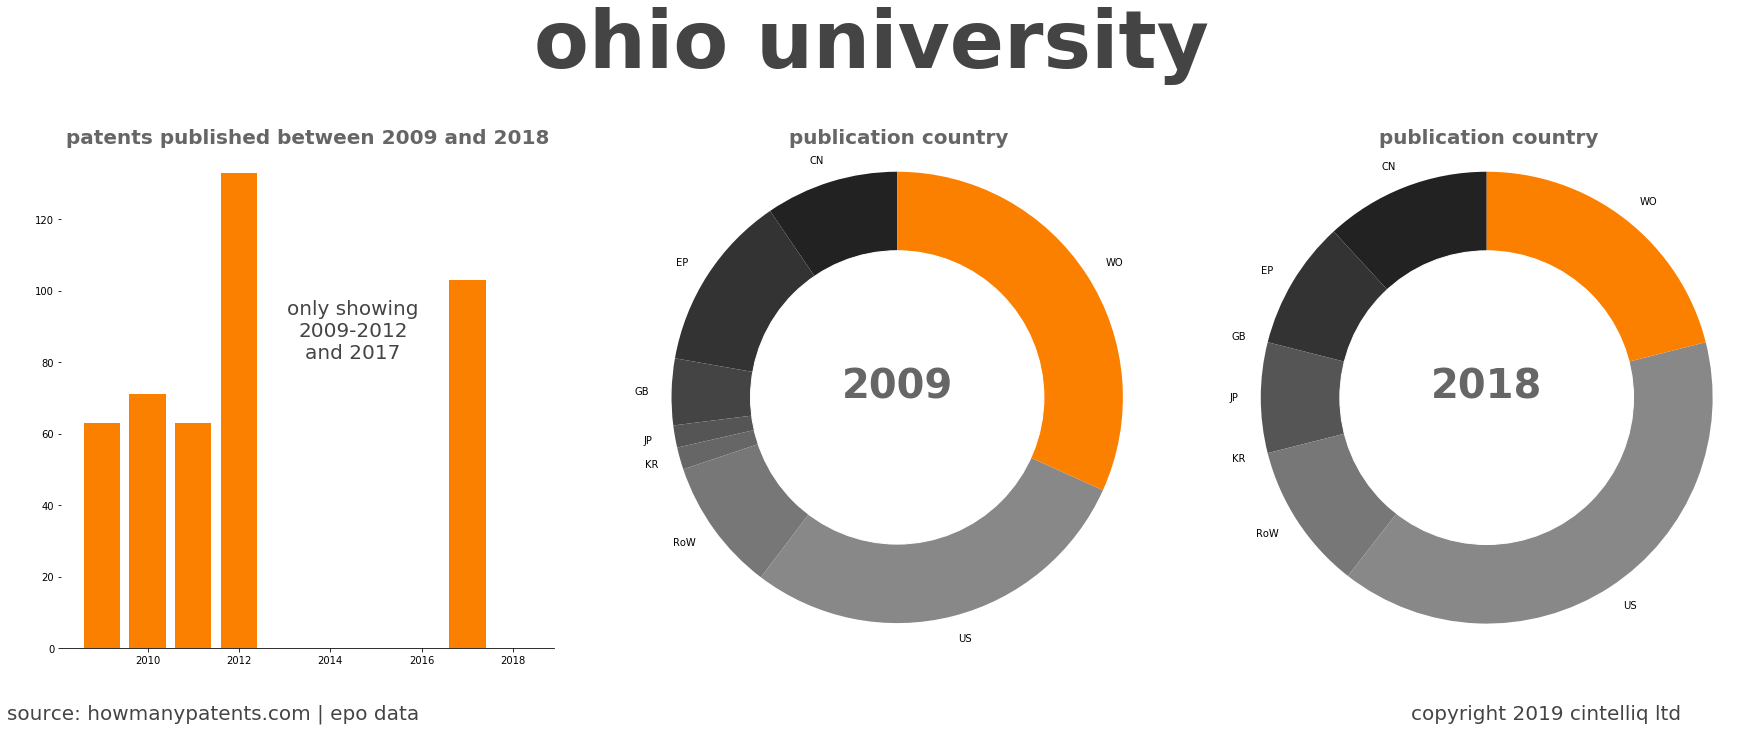 summary of patents for Ohio University